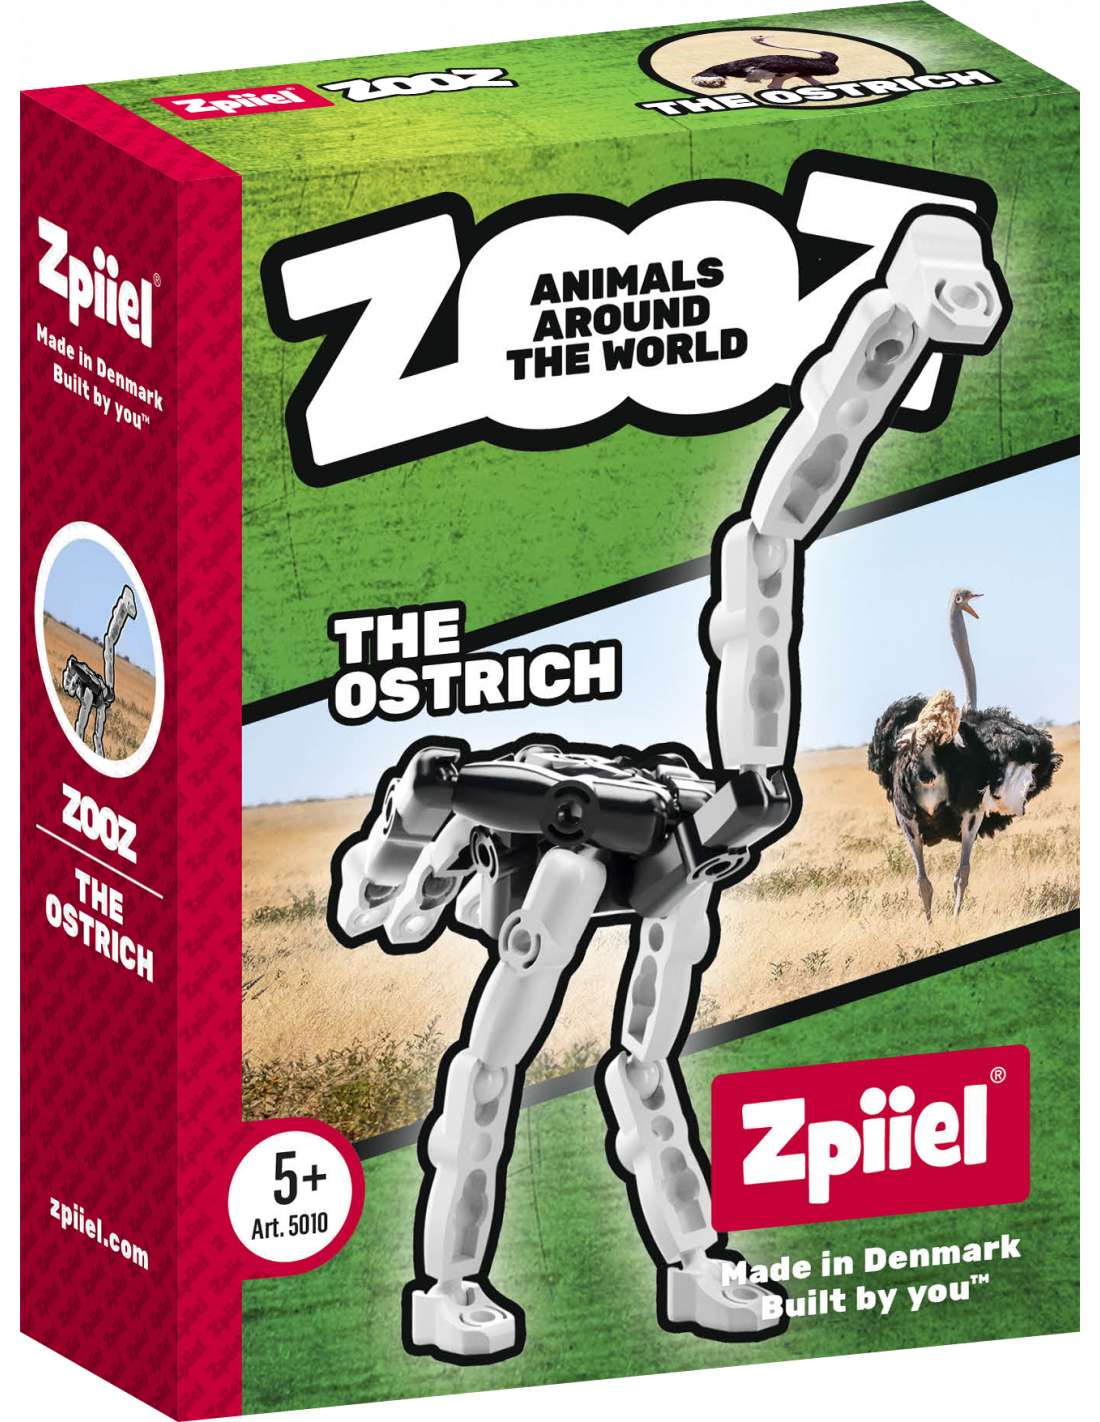 Конструктор Zpiiel ZooZ The Ostrich Страус (5010)